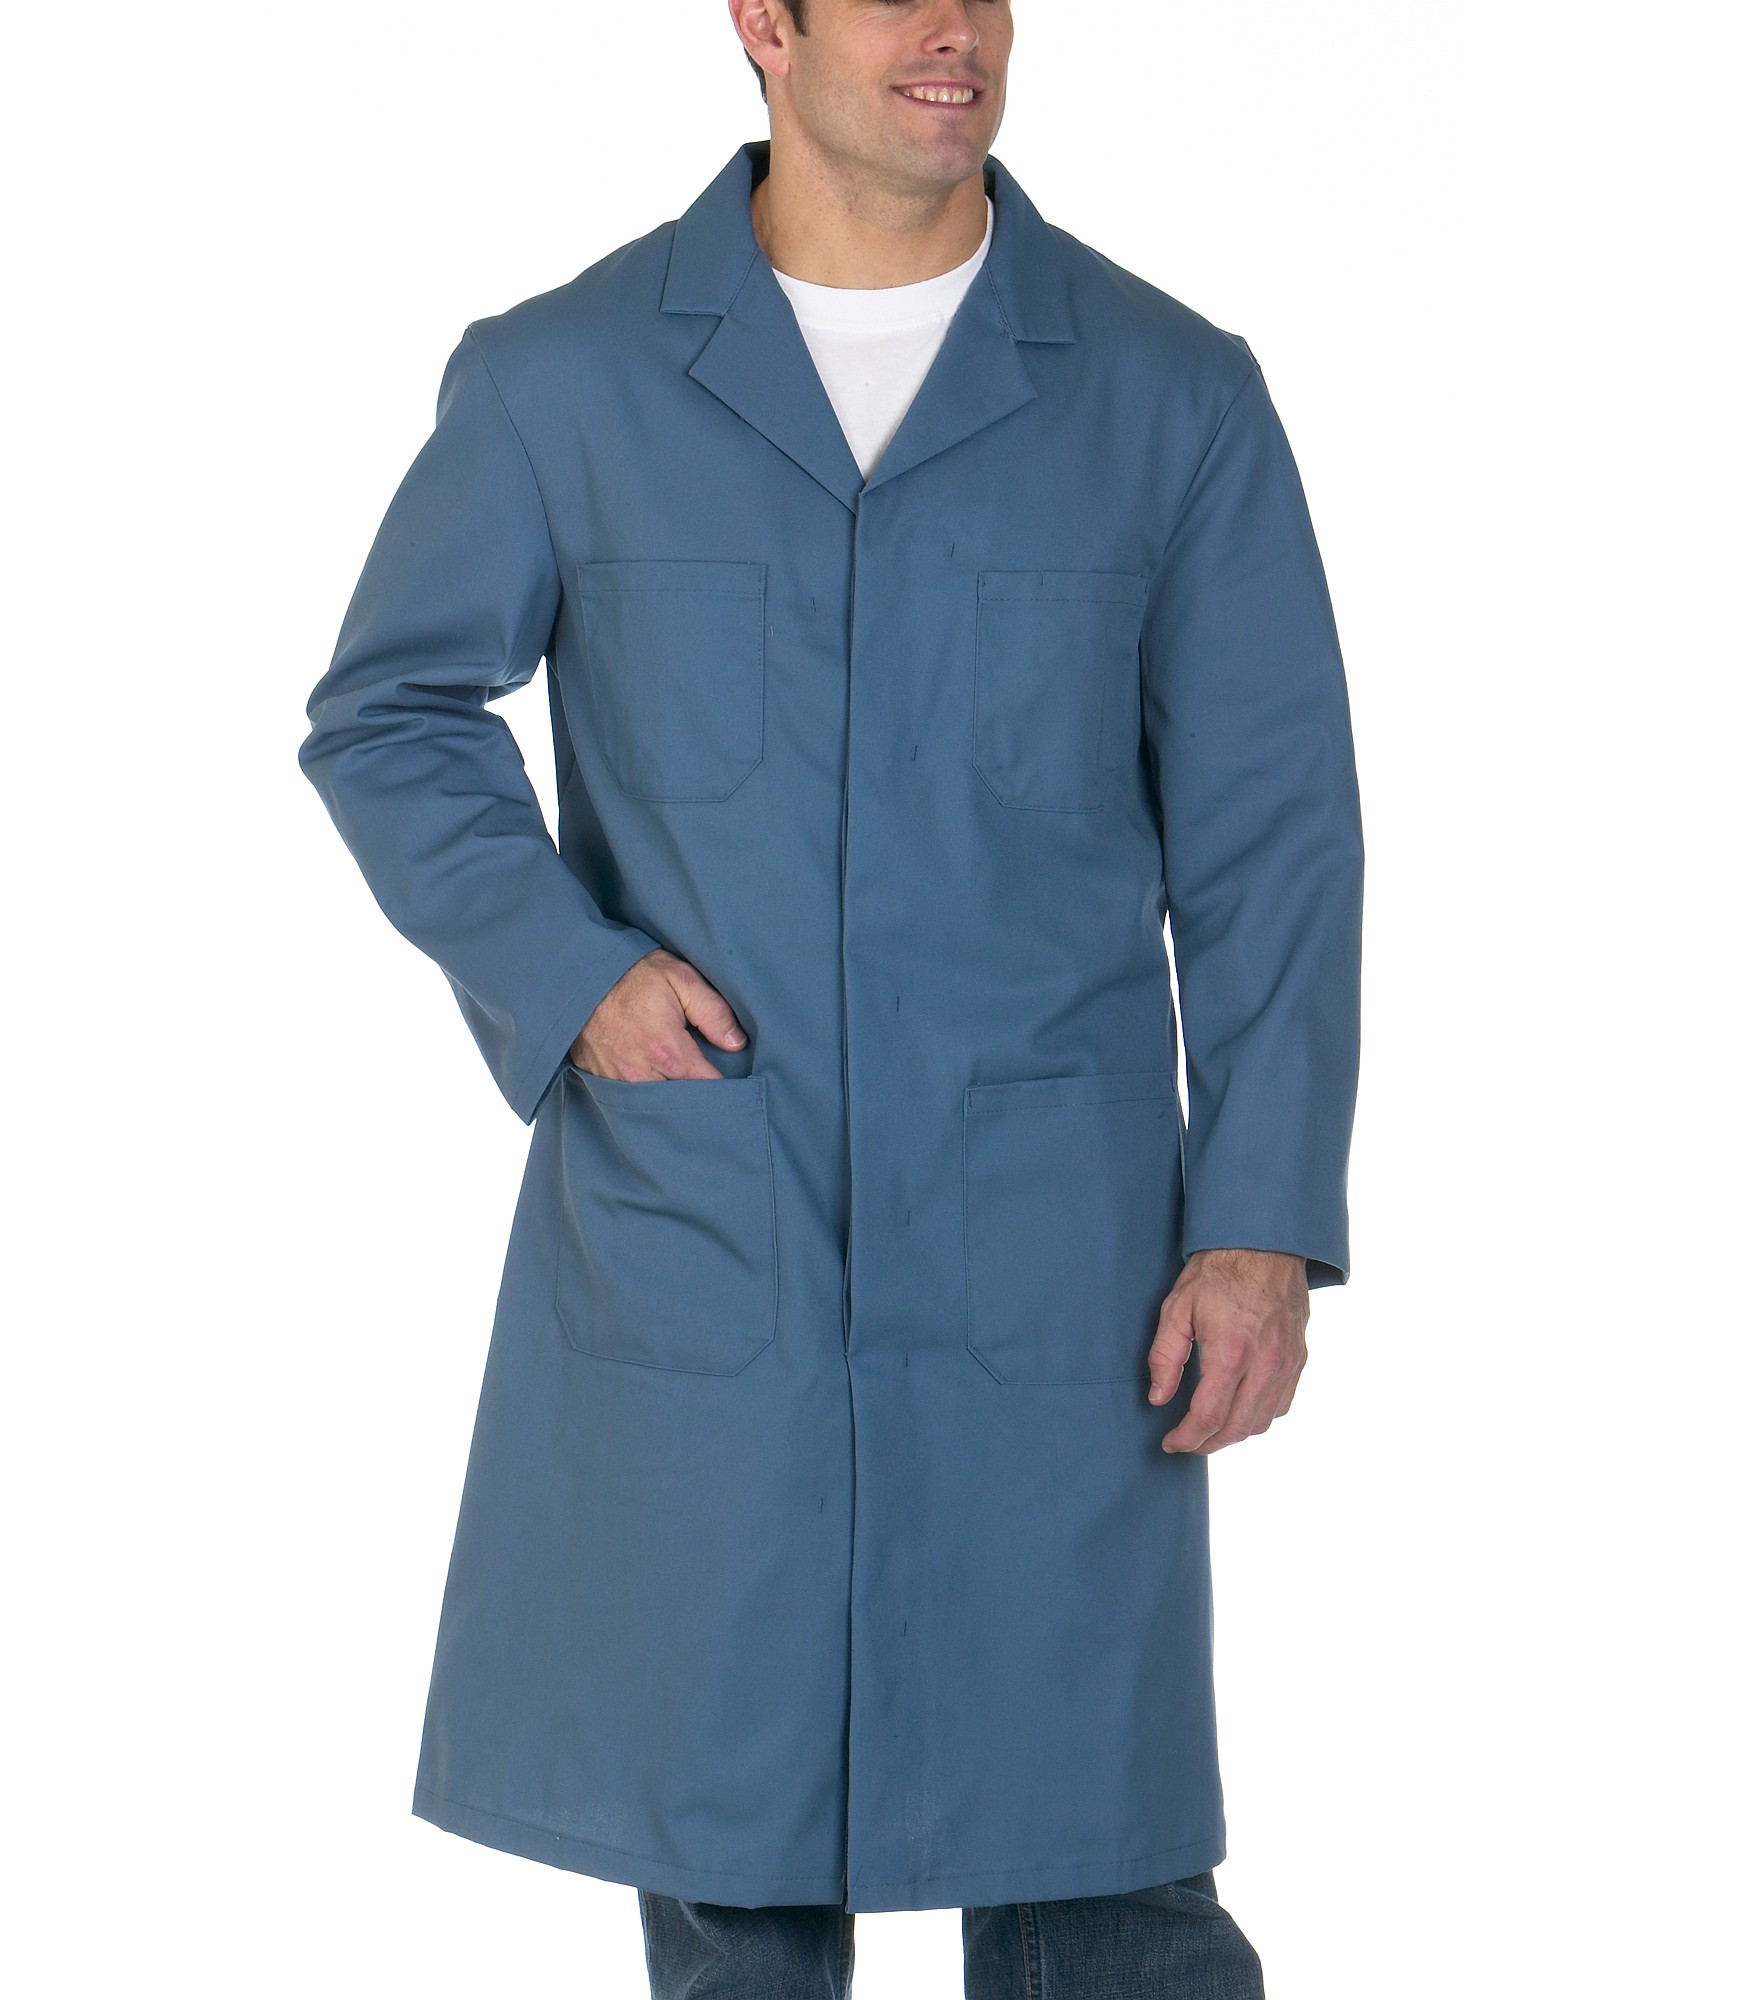 AMP_CA | Premium Uniform 100% Cotton Shop Coat